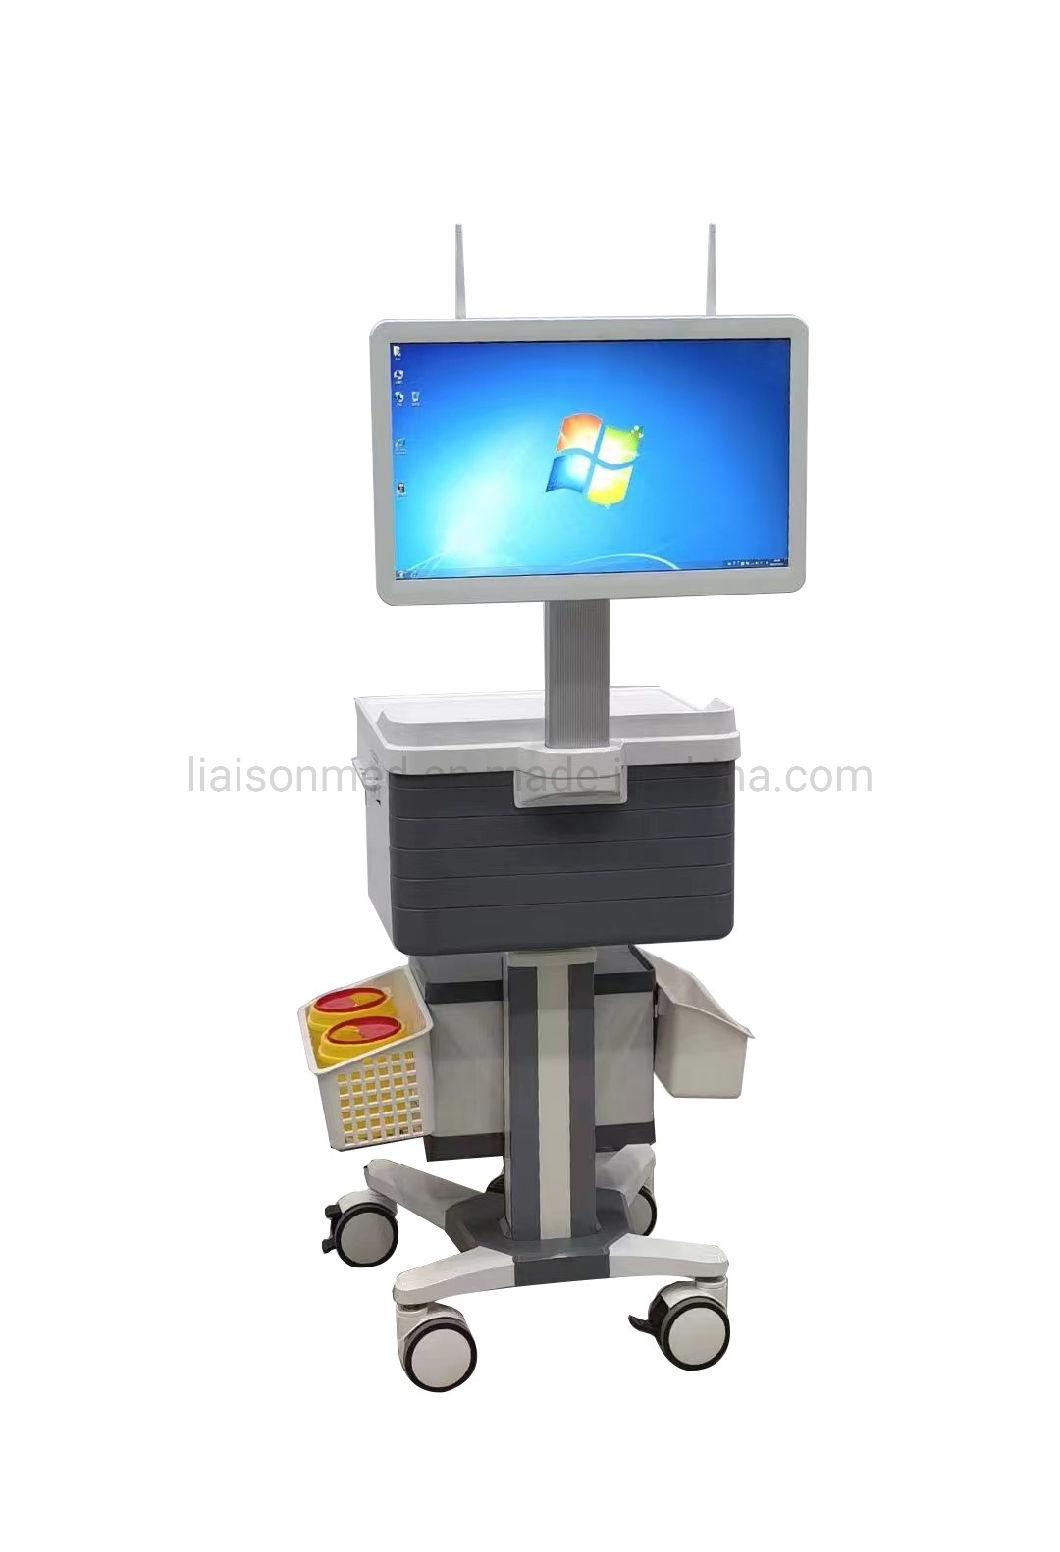 Mn-CPU001 Medical Medical Equipment Mobile System Computer Workstation Trolley